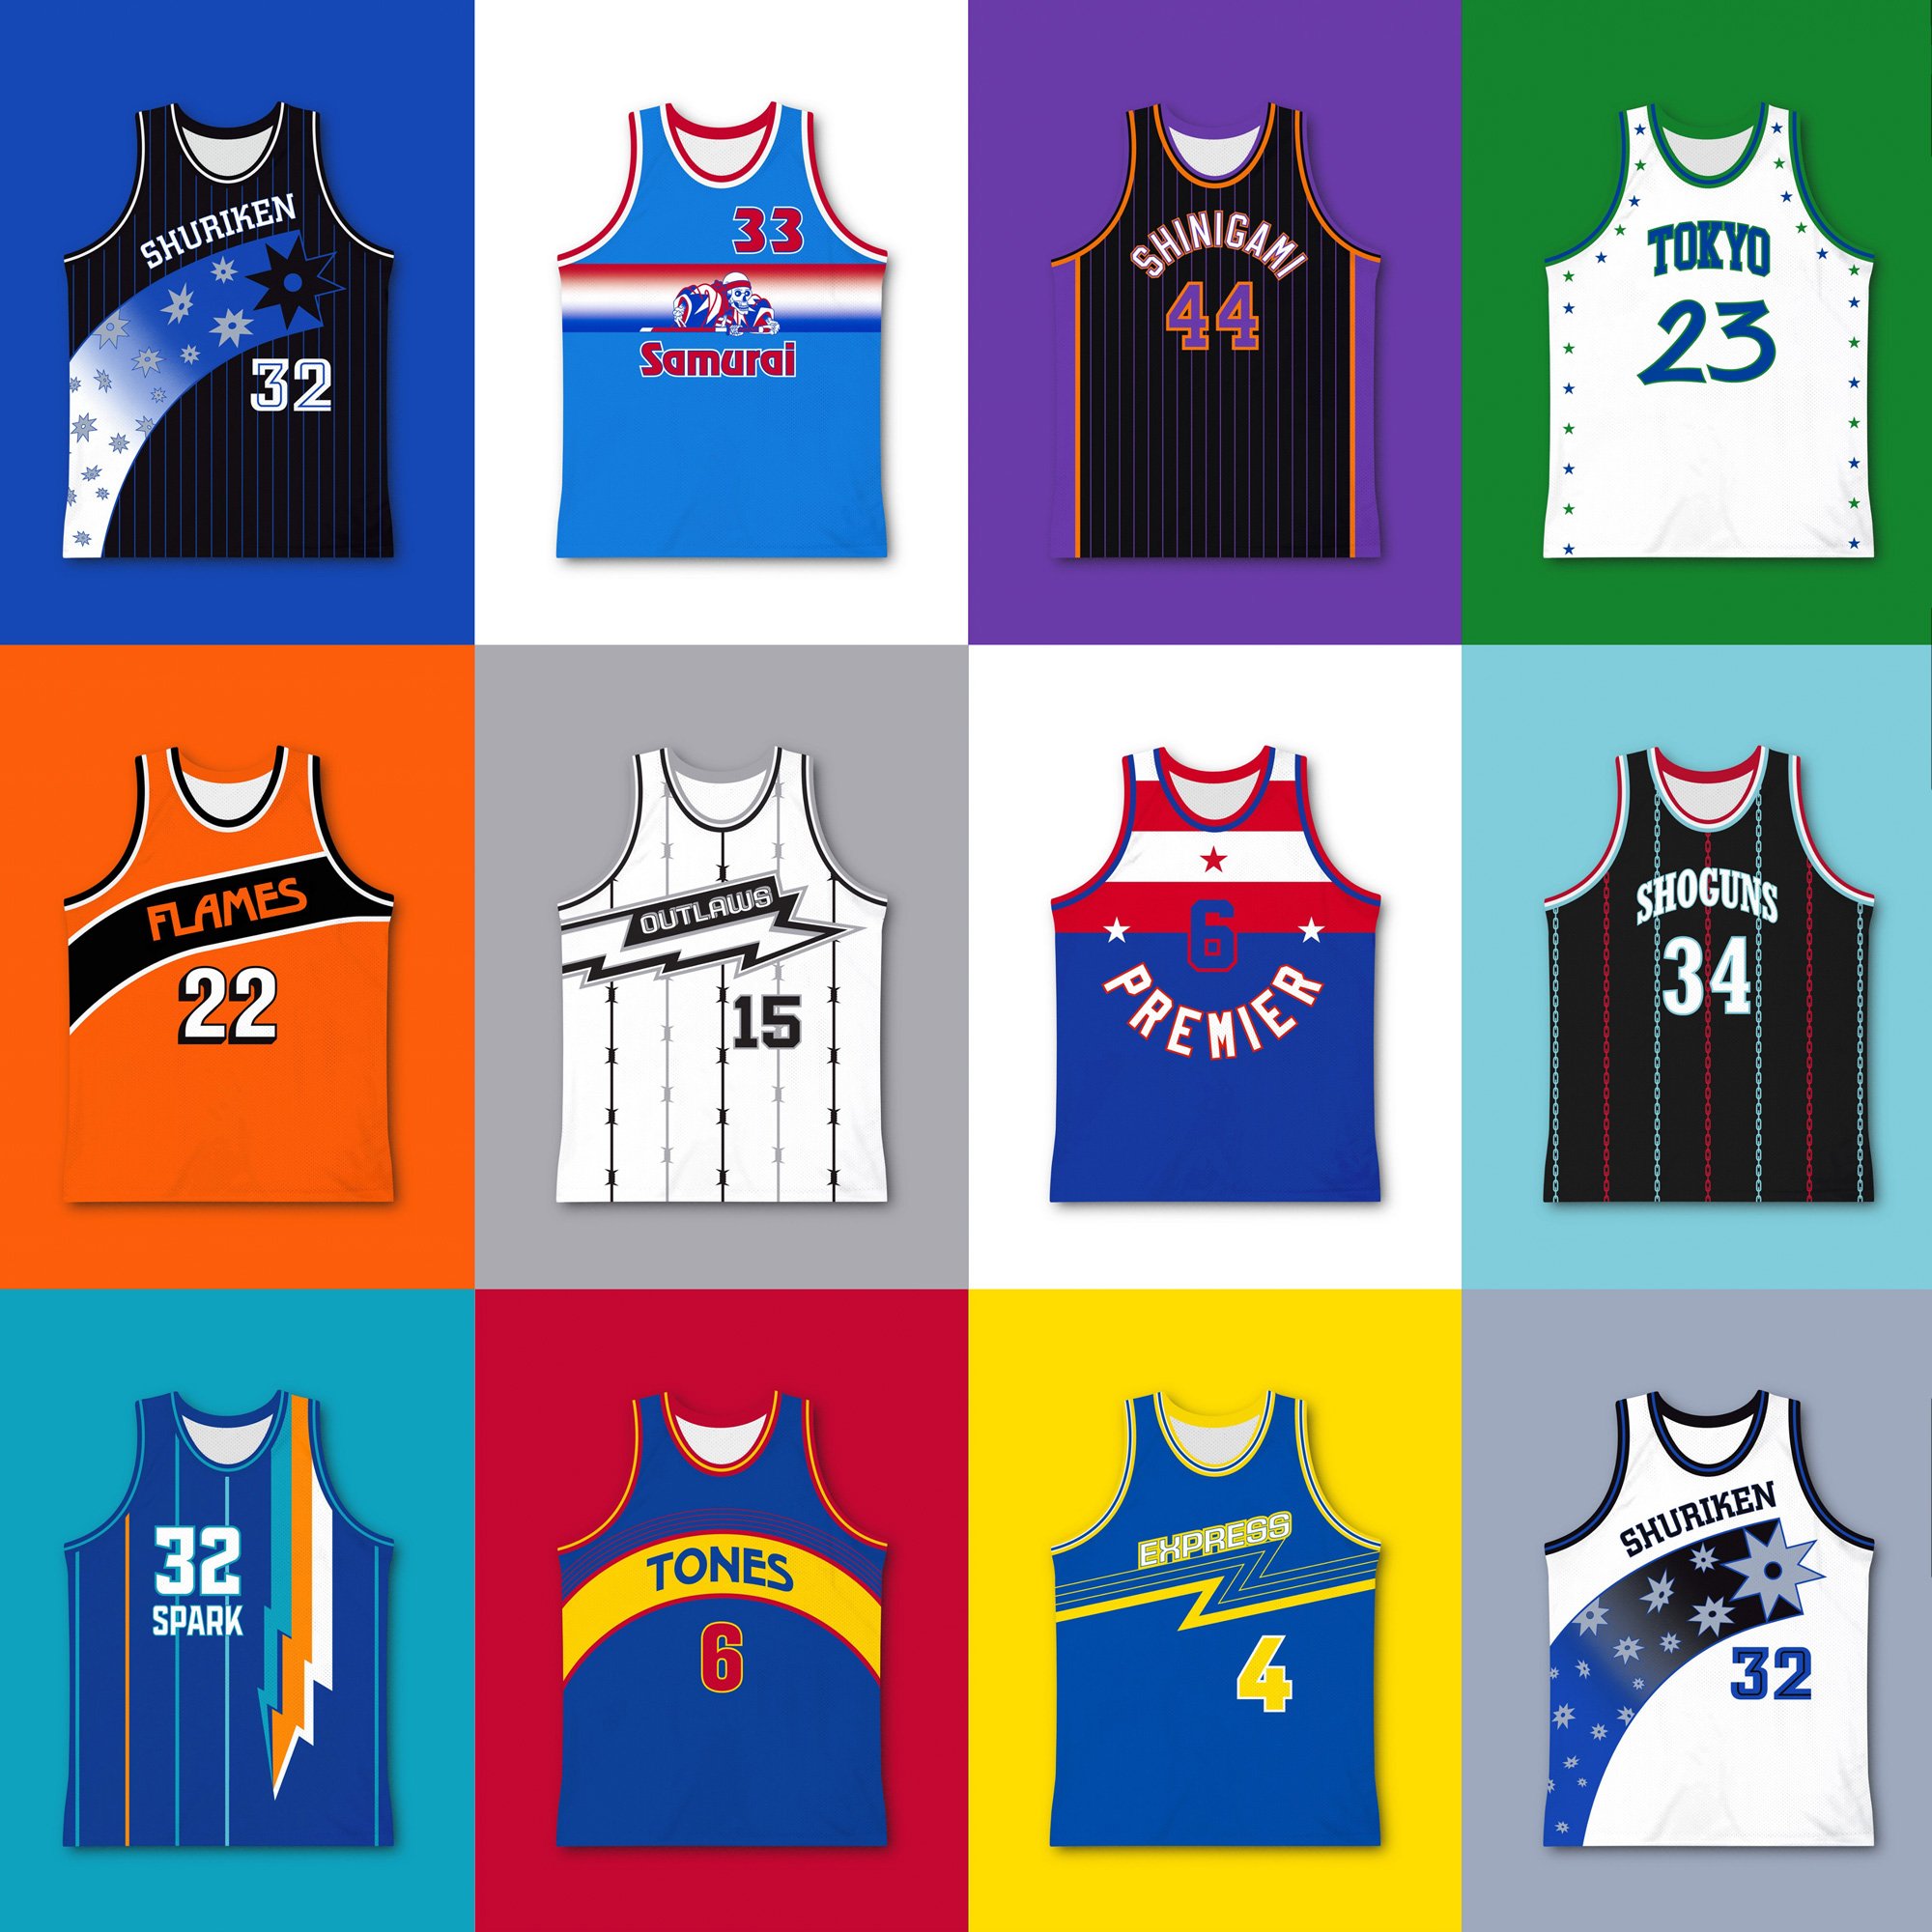 all basketball jerseys